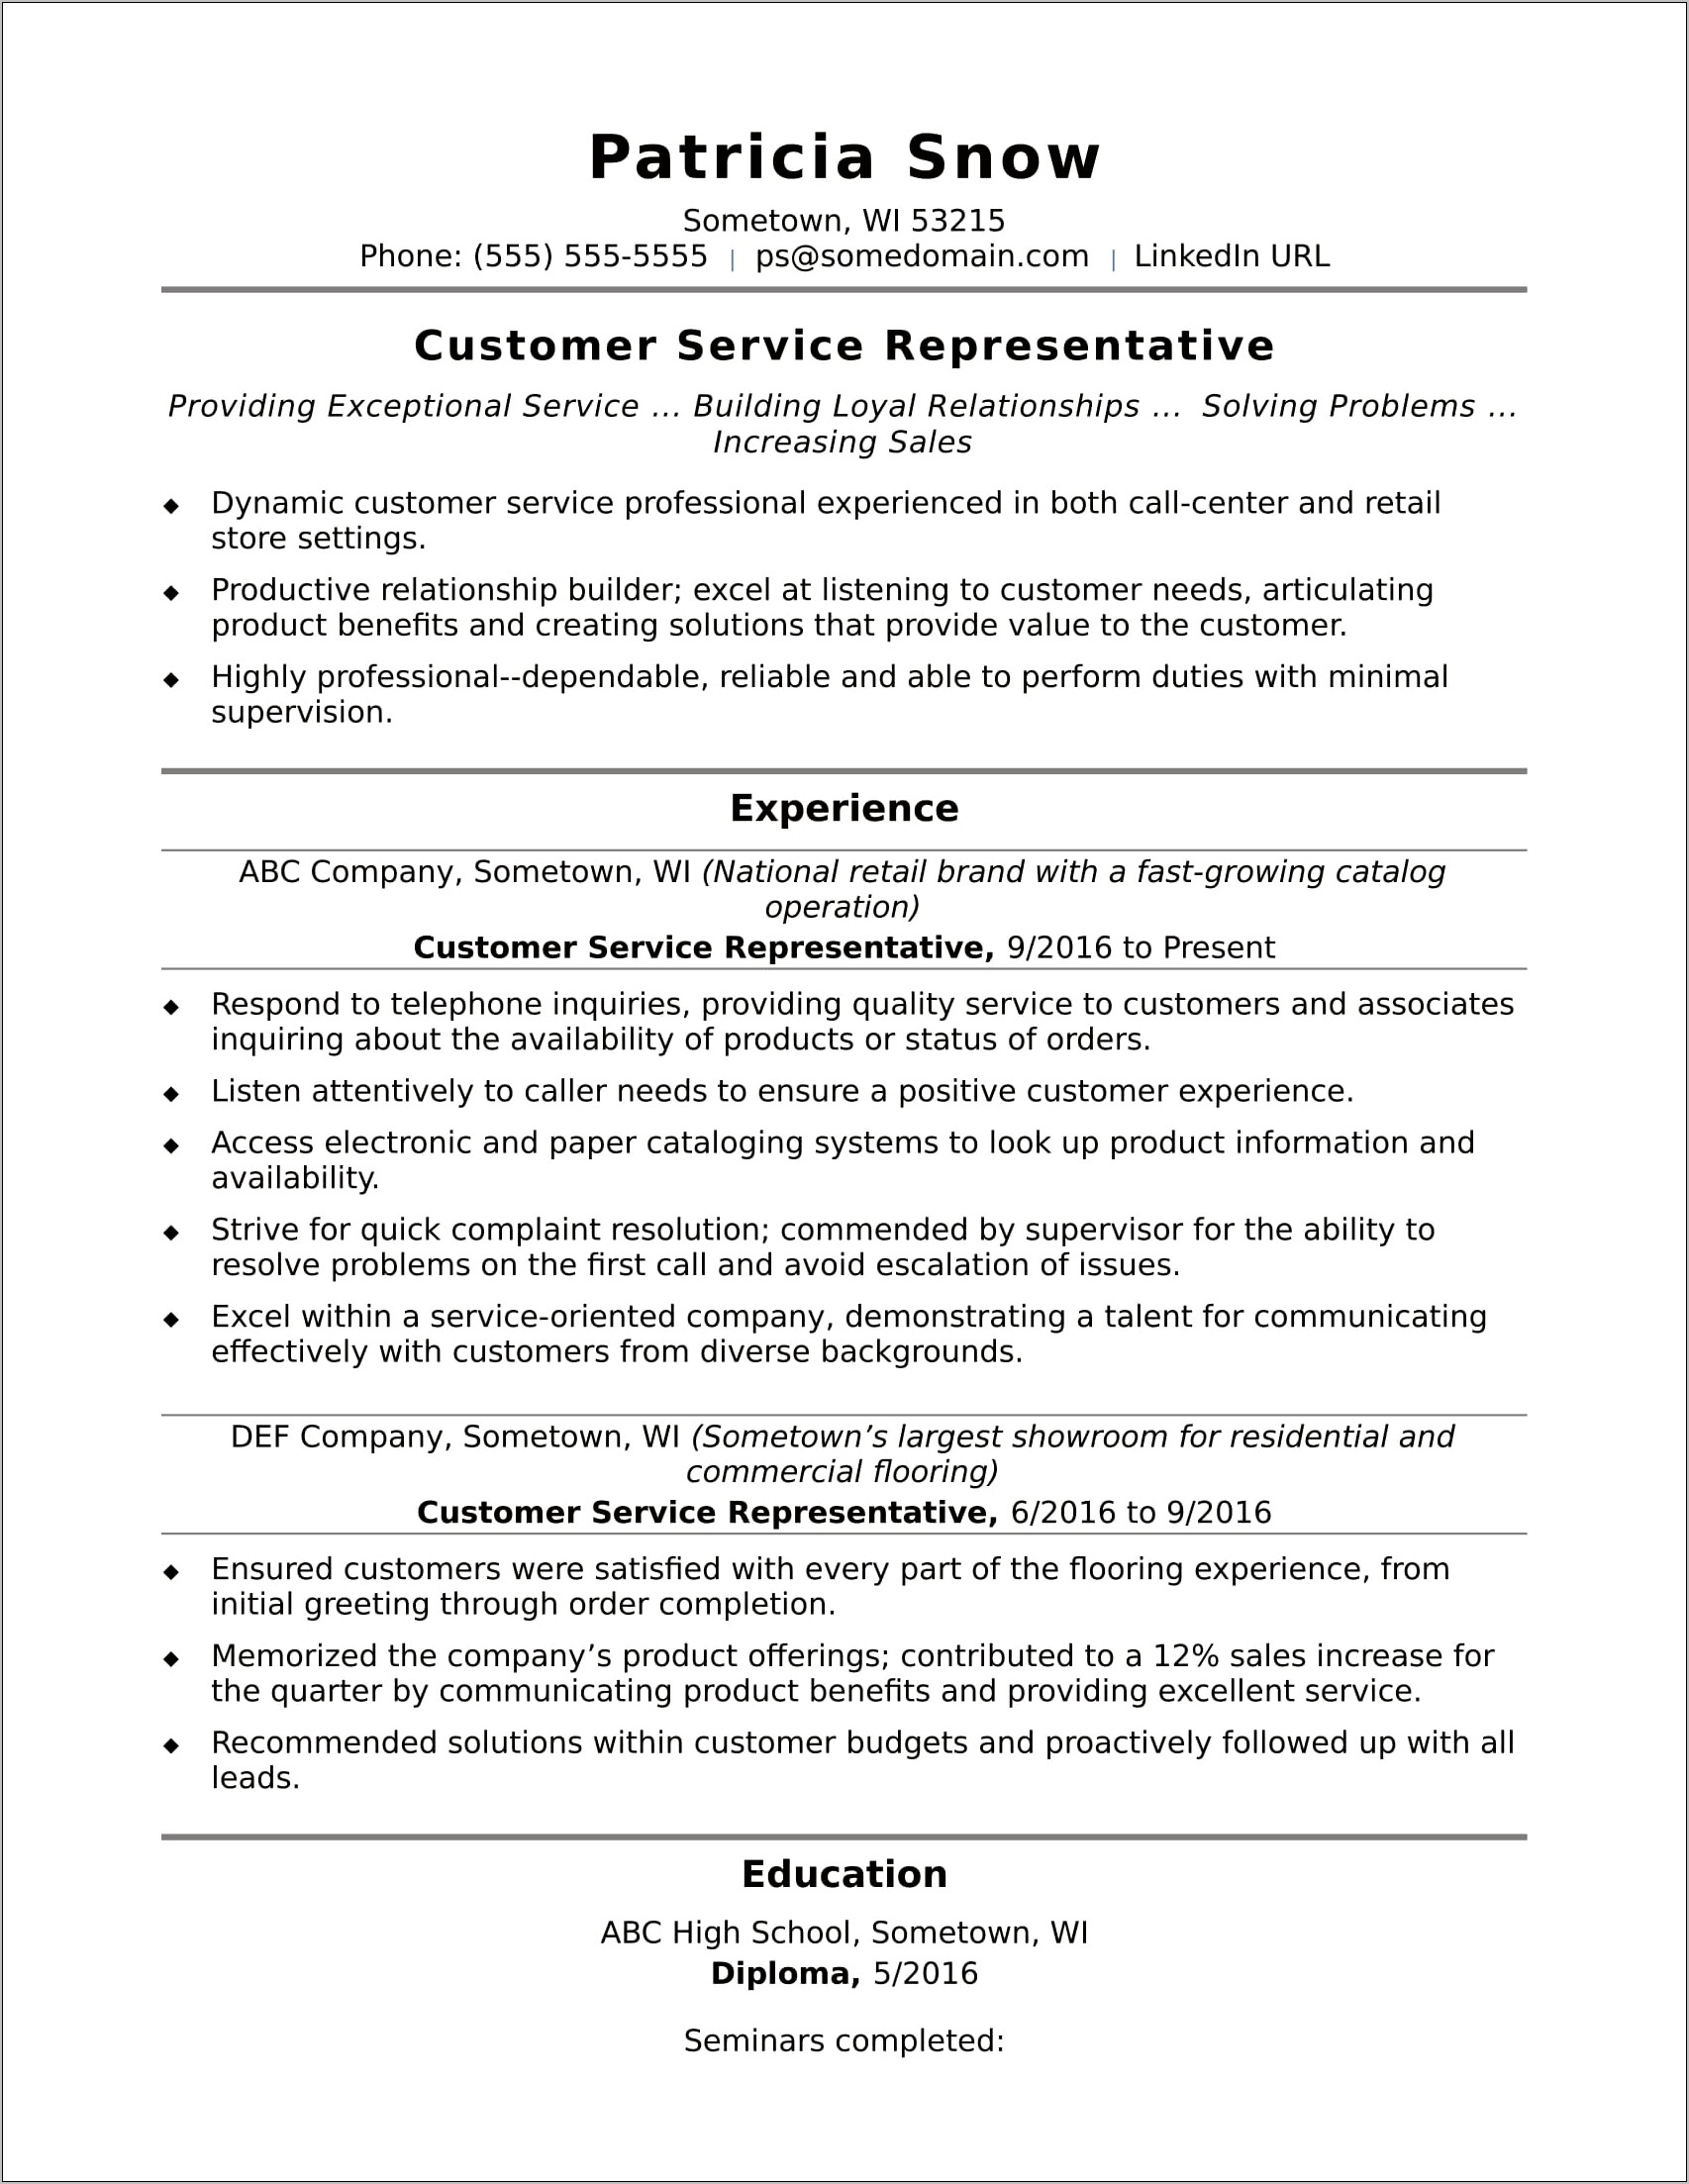 Customer Service Professional Resume Objective